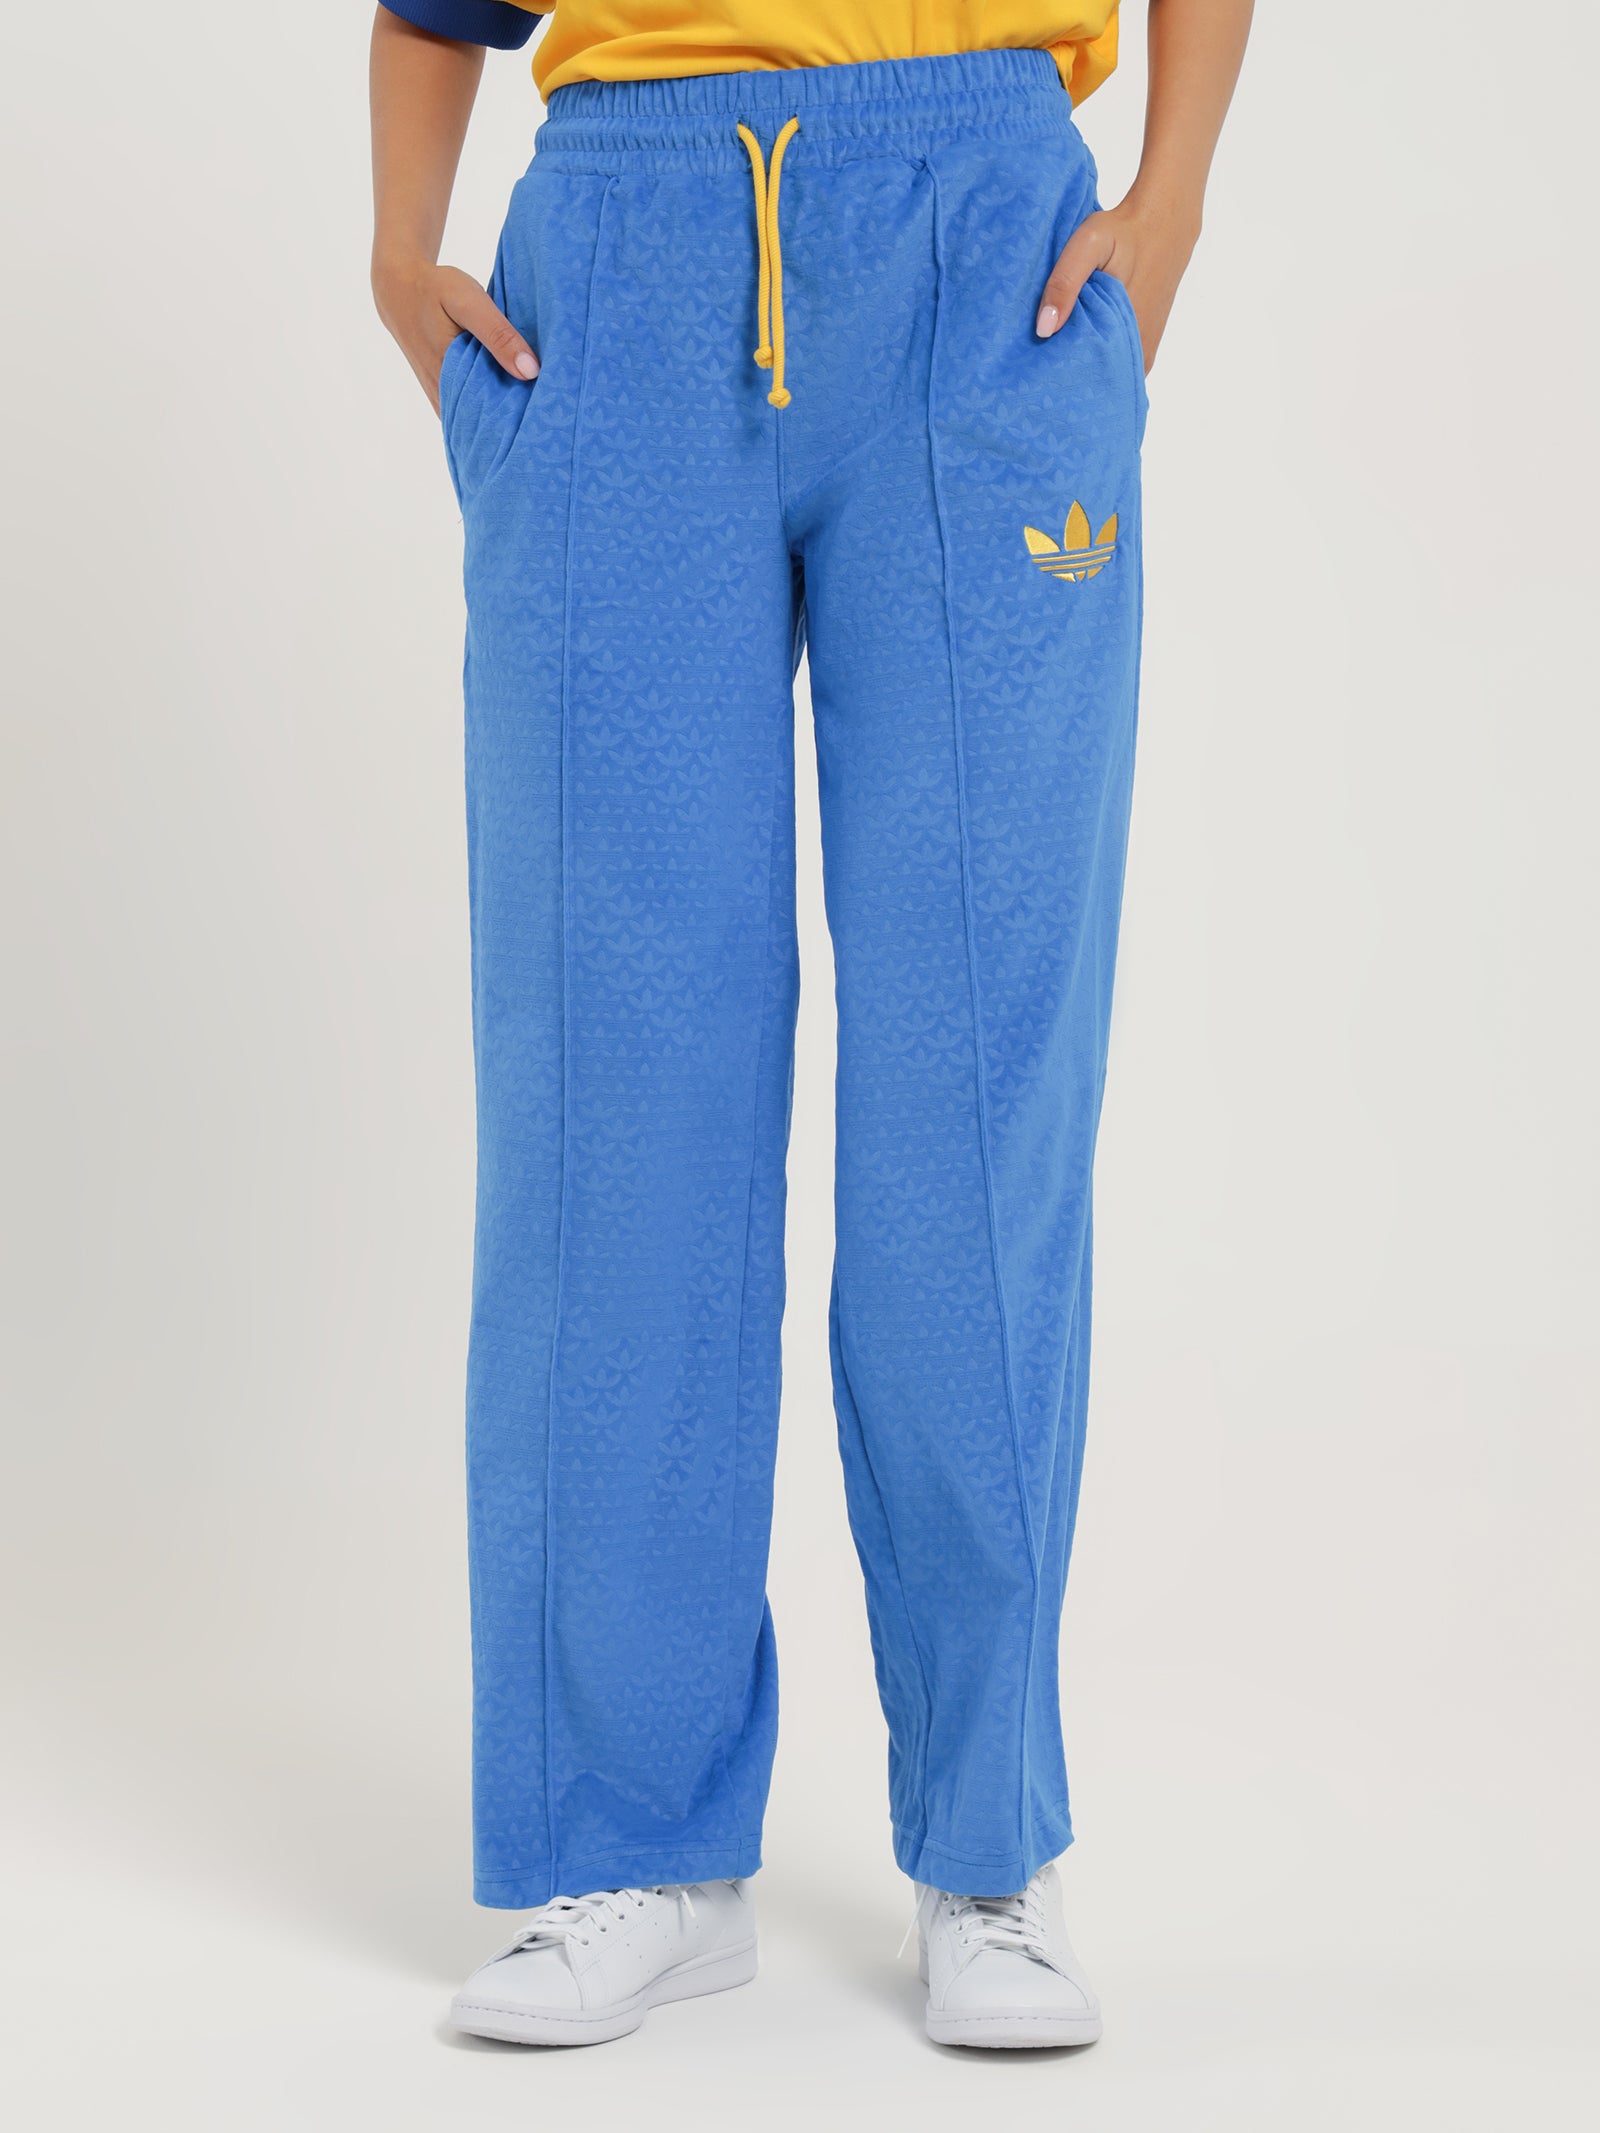 adidas Adicolor Heritage Now Velour Pants - Blue, Women's Lifestyle, adidas US